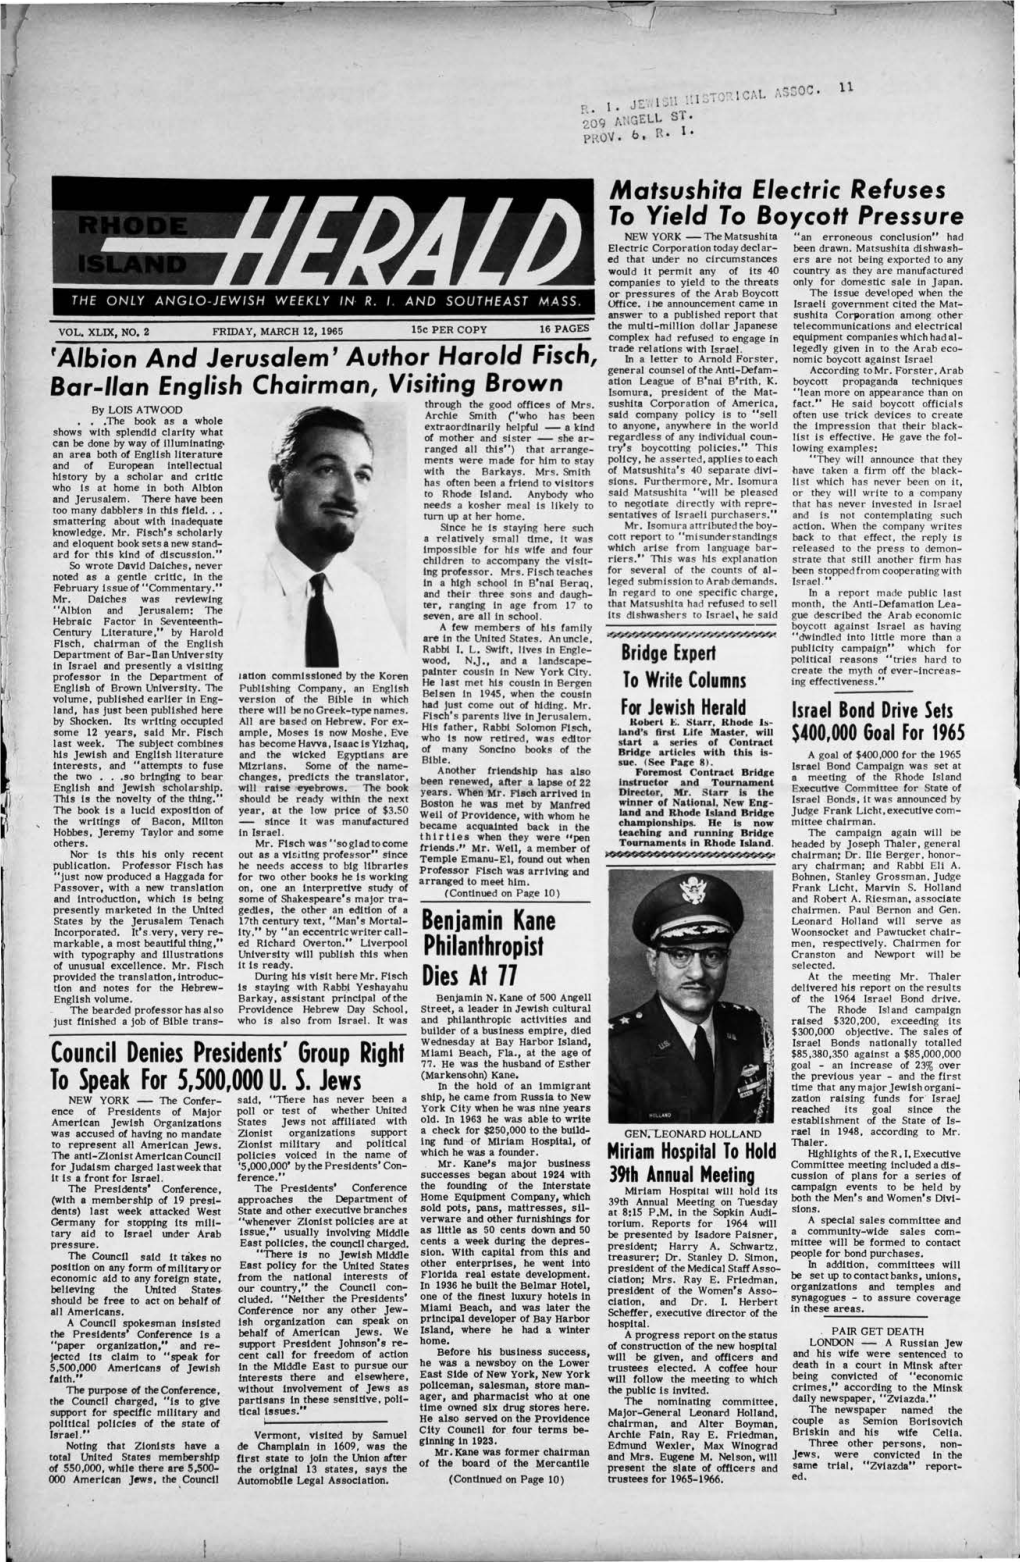 MARCH 12, 1965 15C PER COPY 16 PAGES VOL